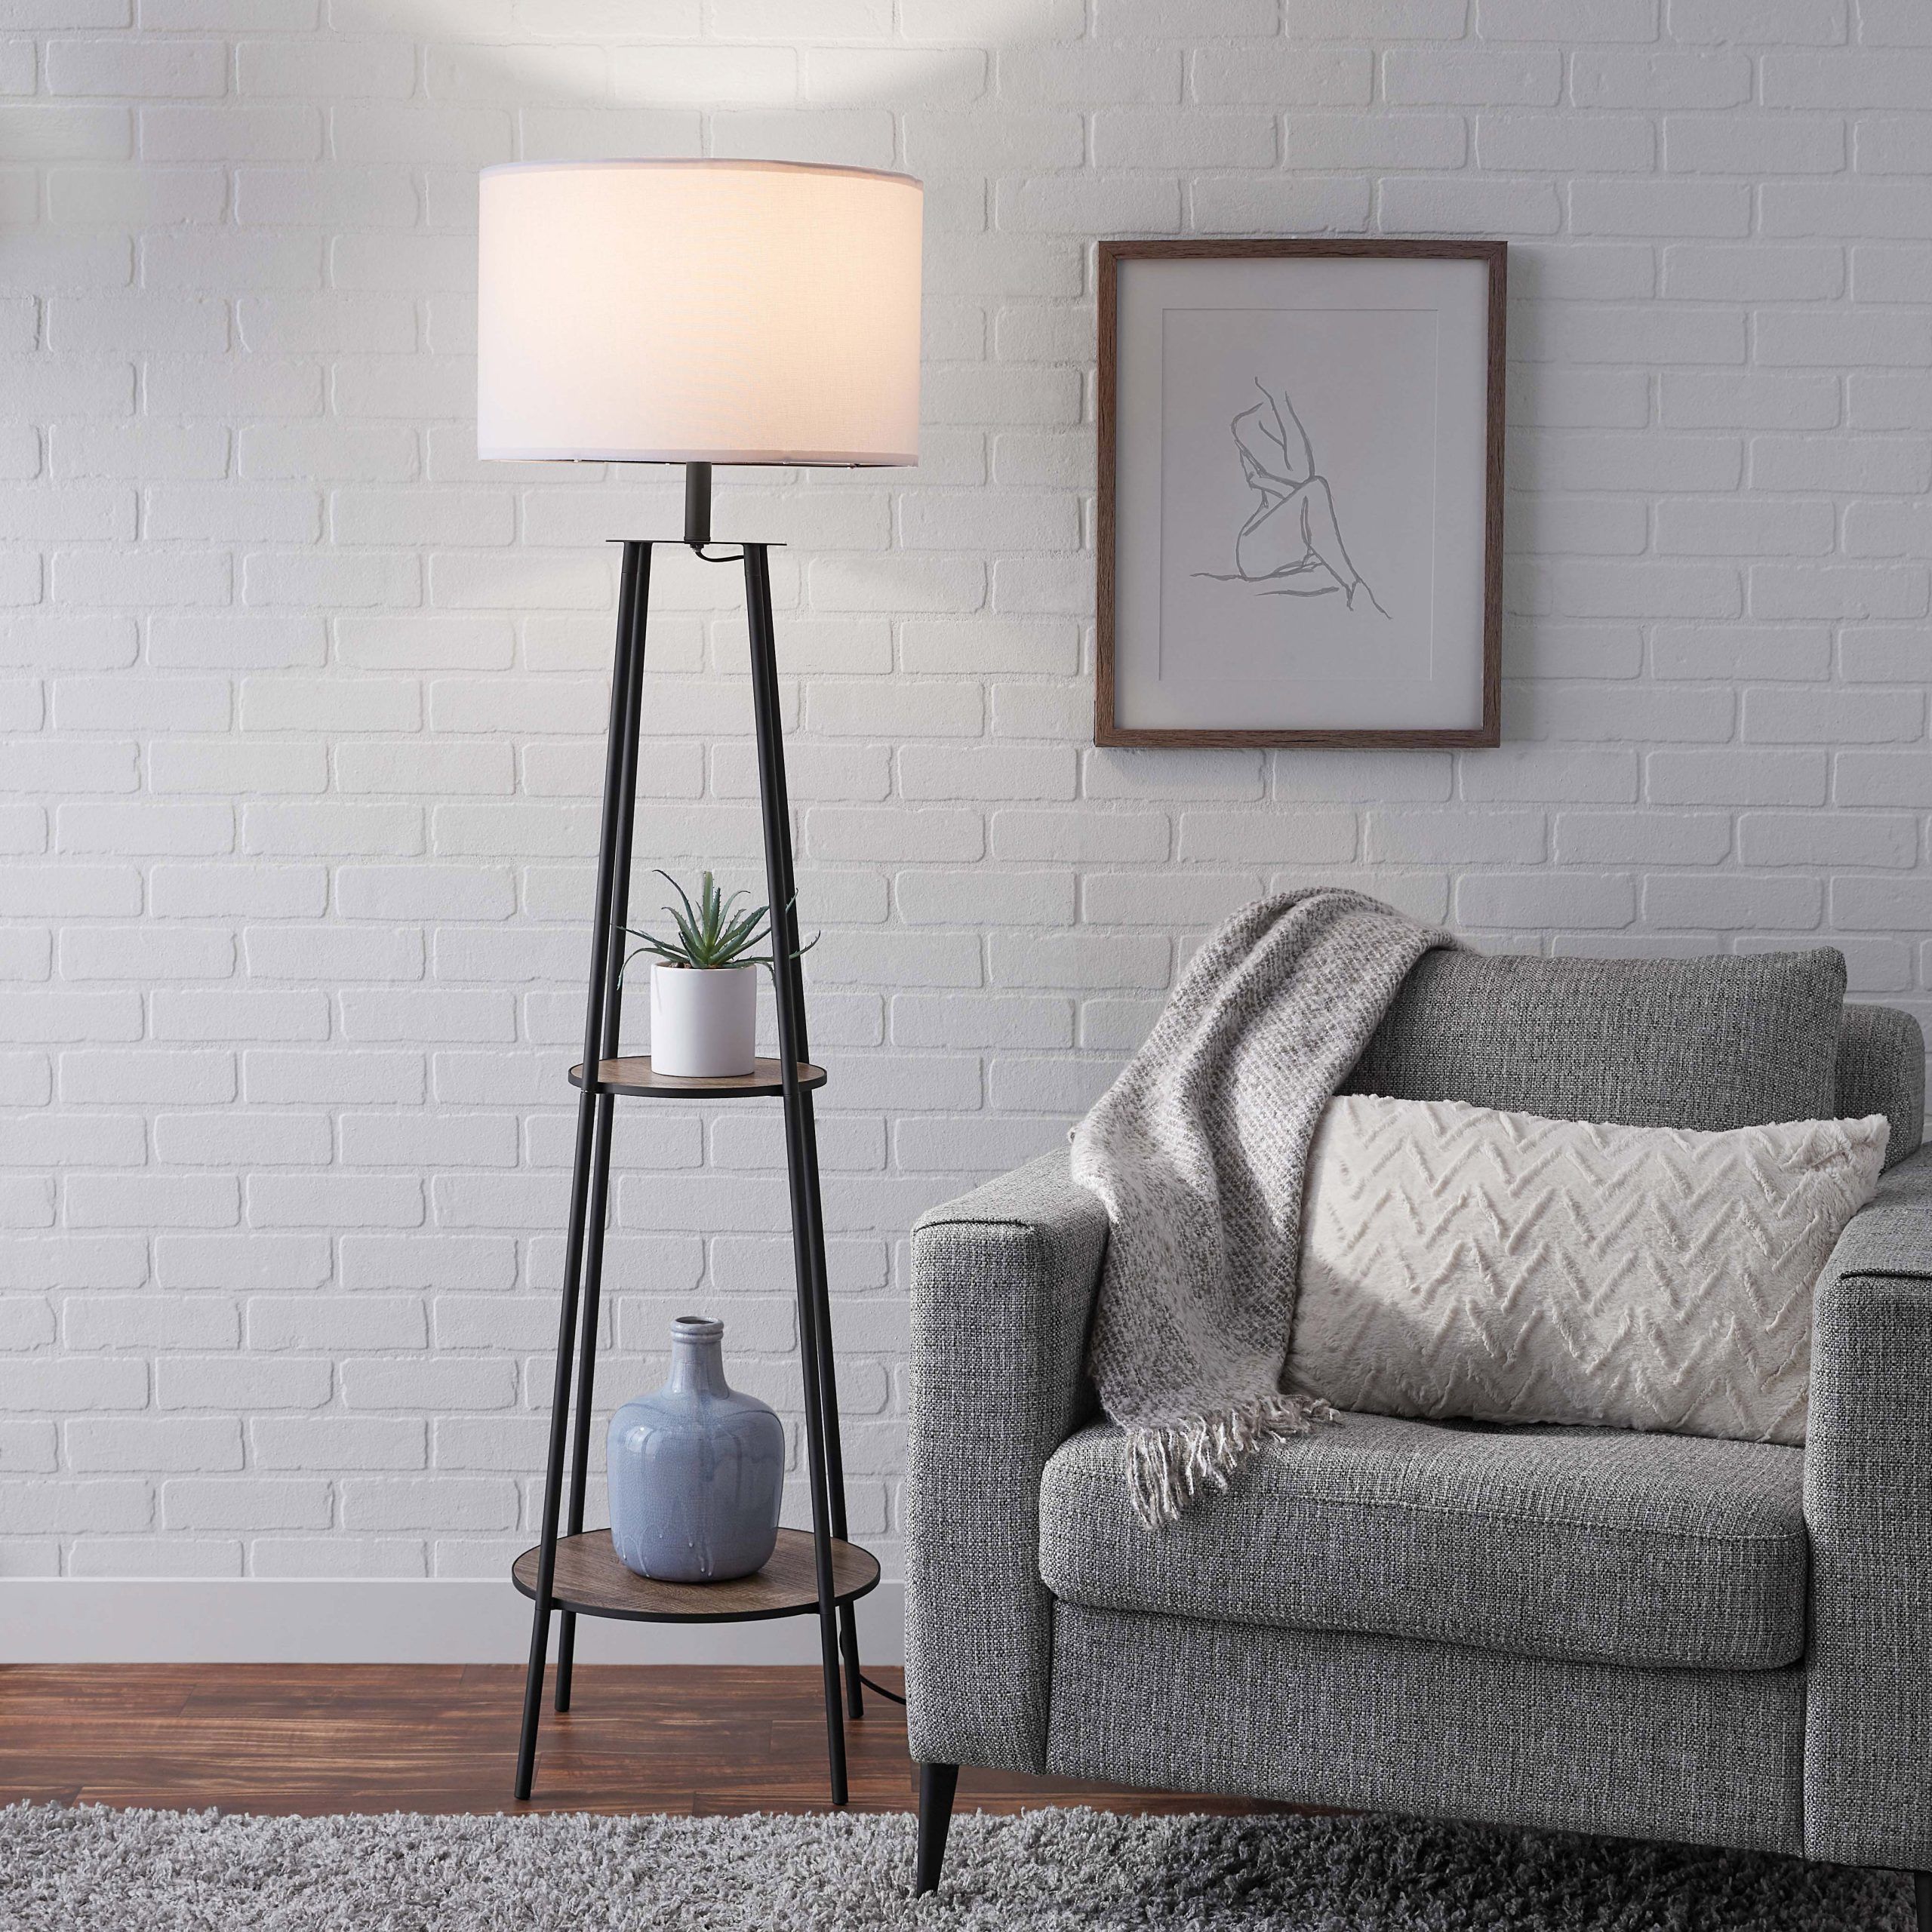 Mainstays Etagere Matte Black Floor Lamp, With 2 Wood Shelves, Black Color  – Walmart With Matte Black Floor Lamps (View 5 of 15)